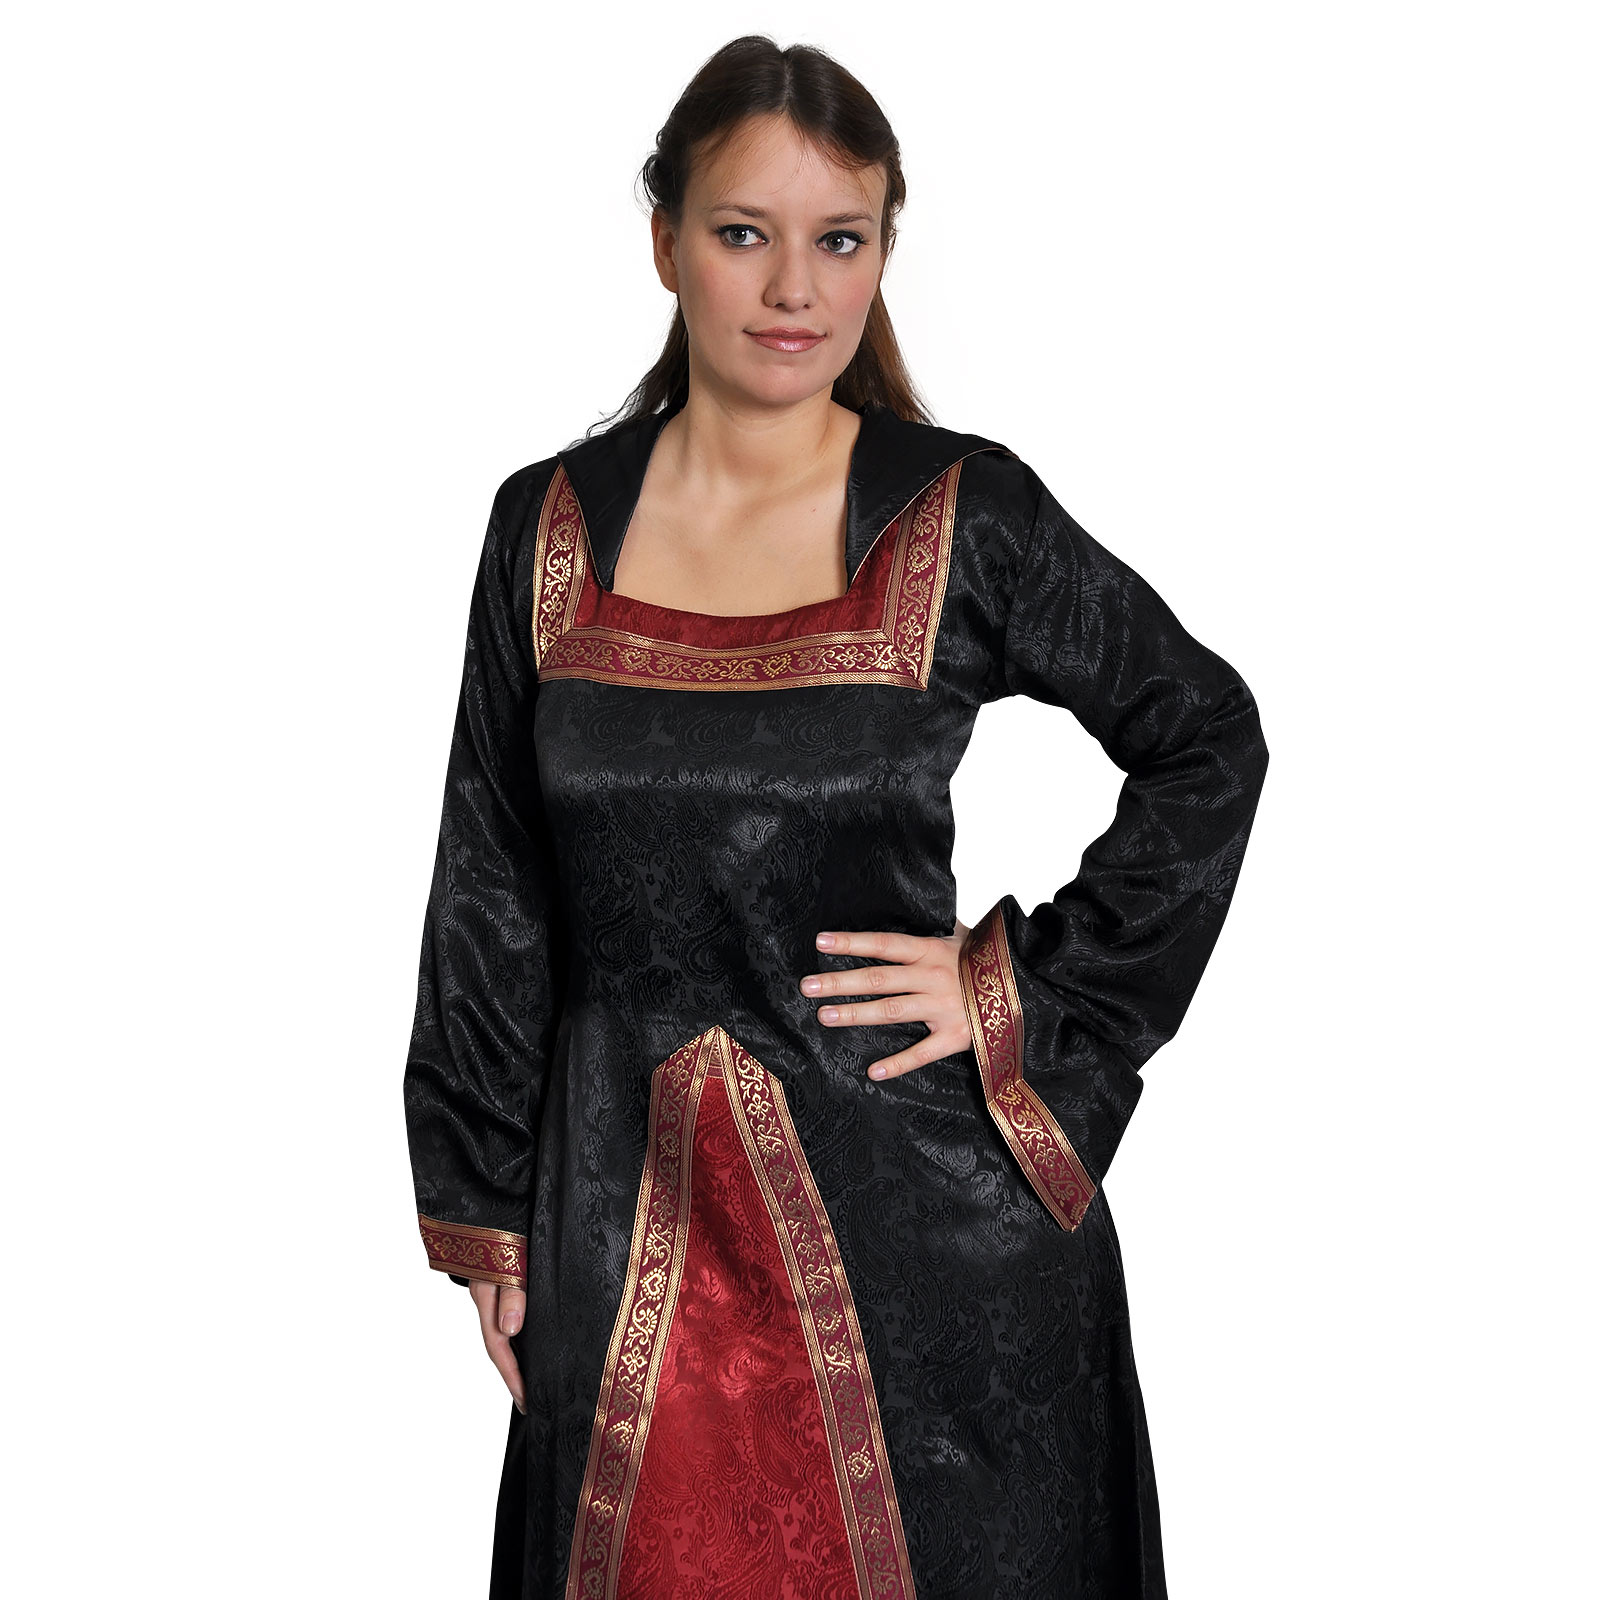 Medieval Dress Otilia with Pointed Hood Black-Bordeaux